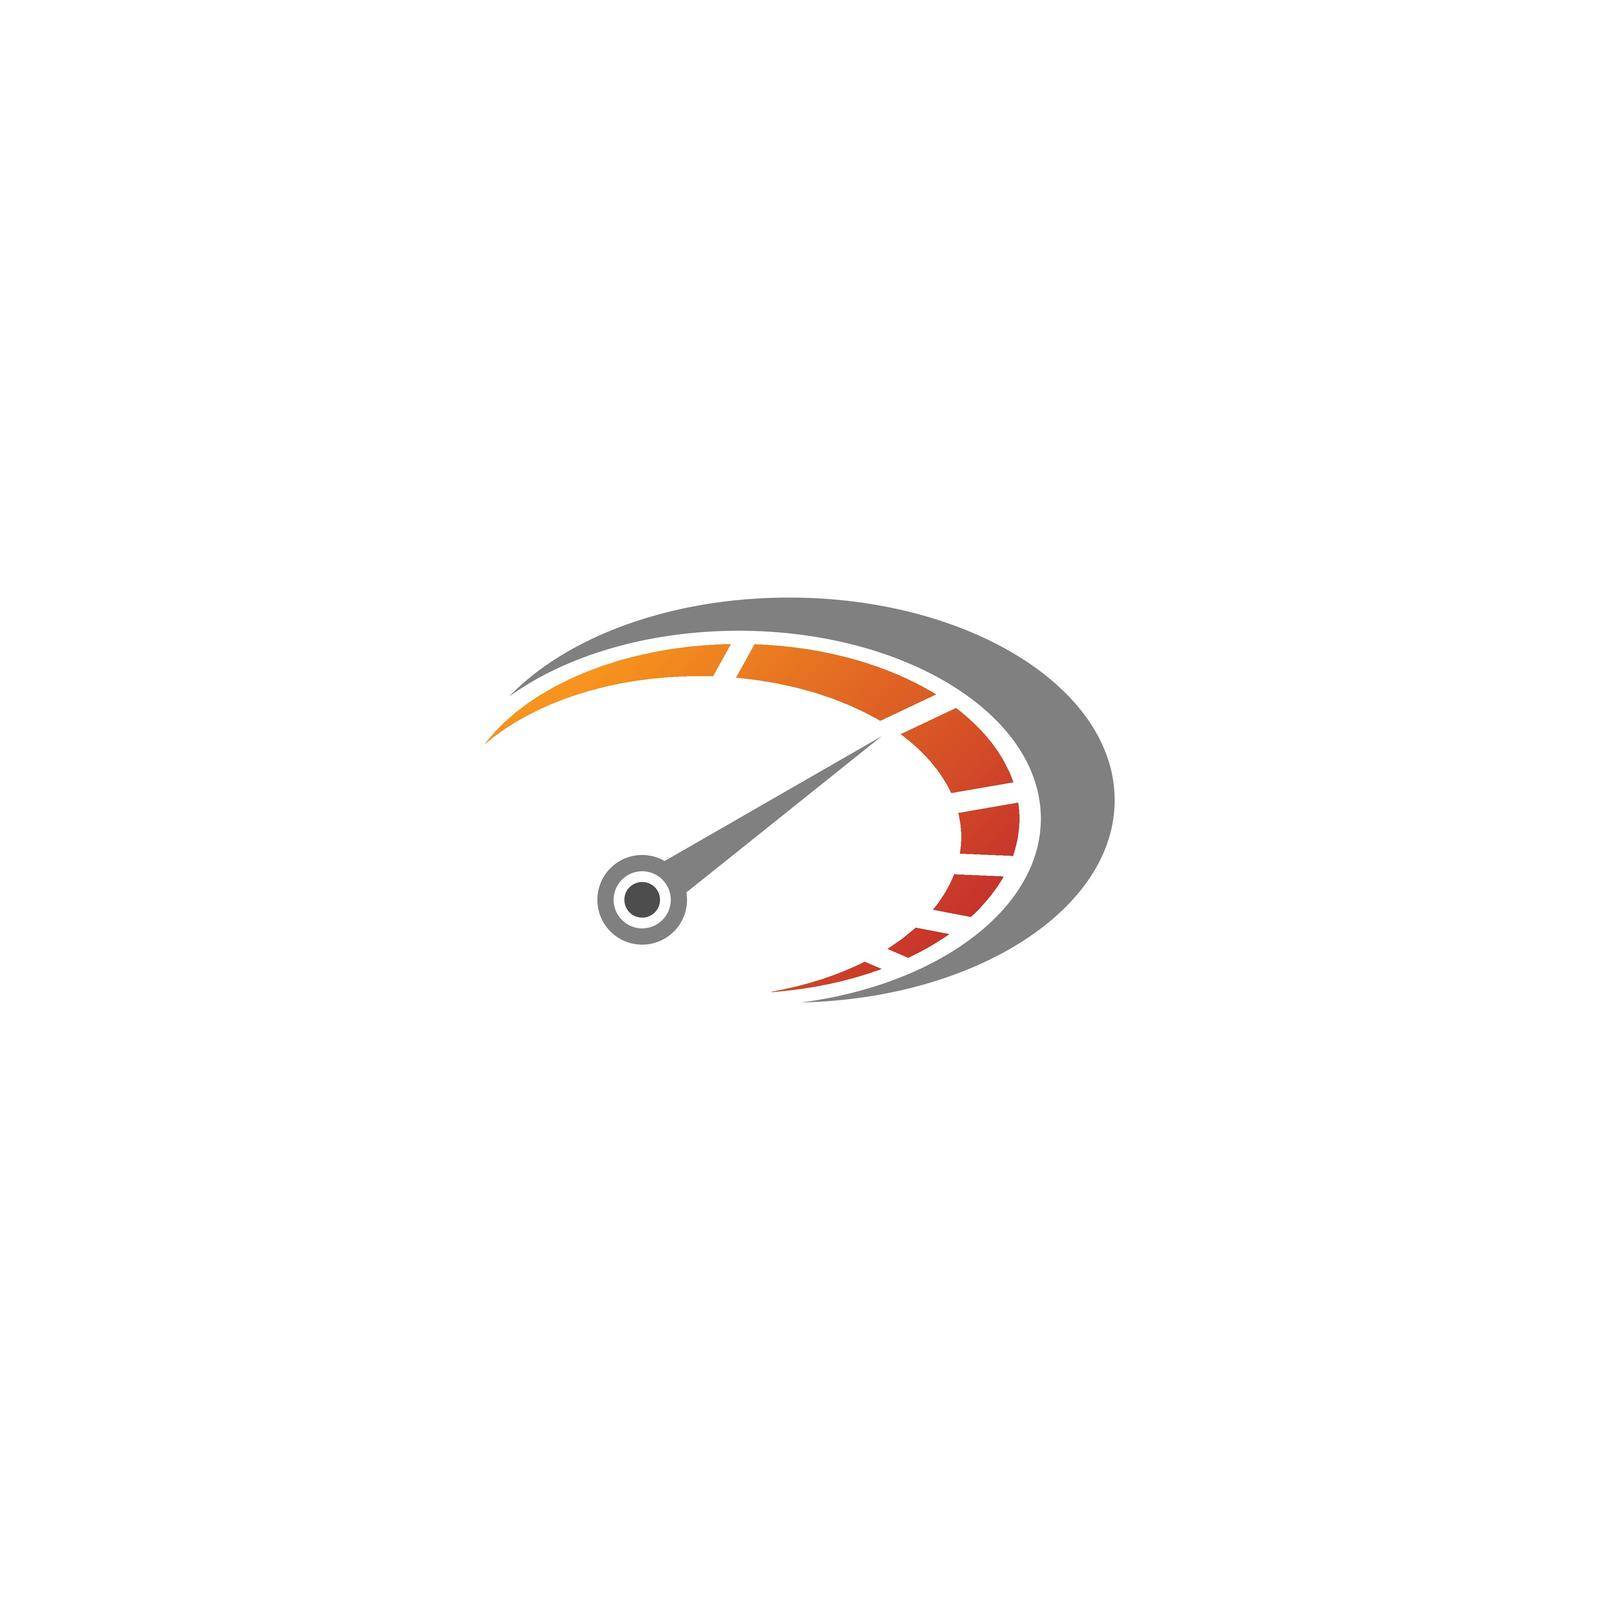 Speedometer icon. Gauge and rpm meter logo by bellaxbudhong3